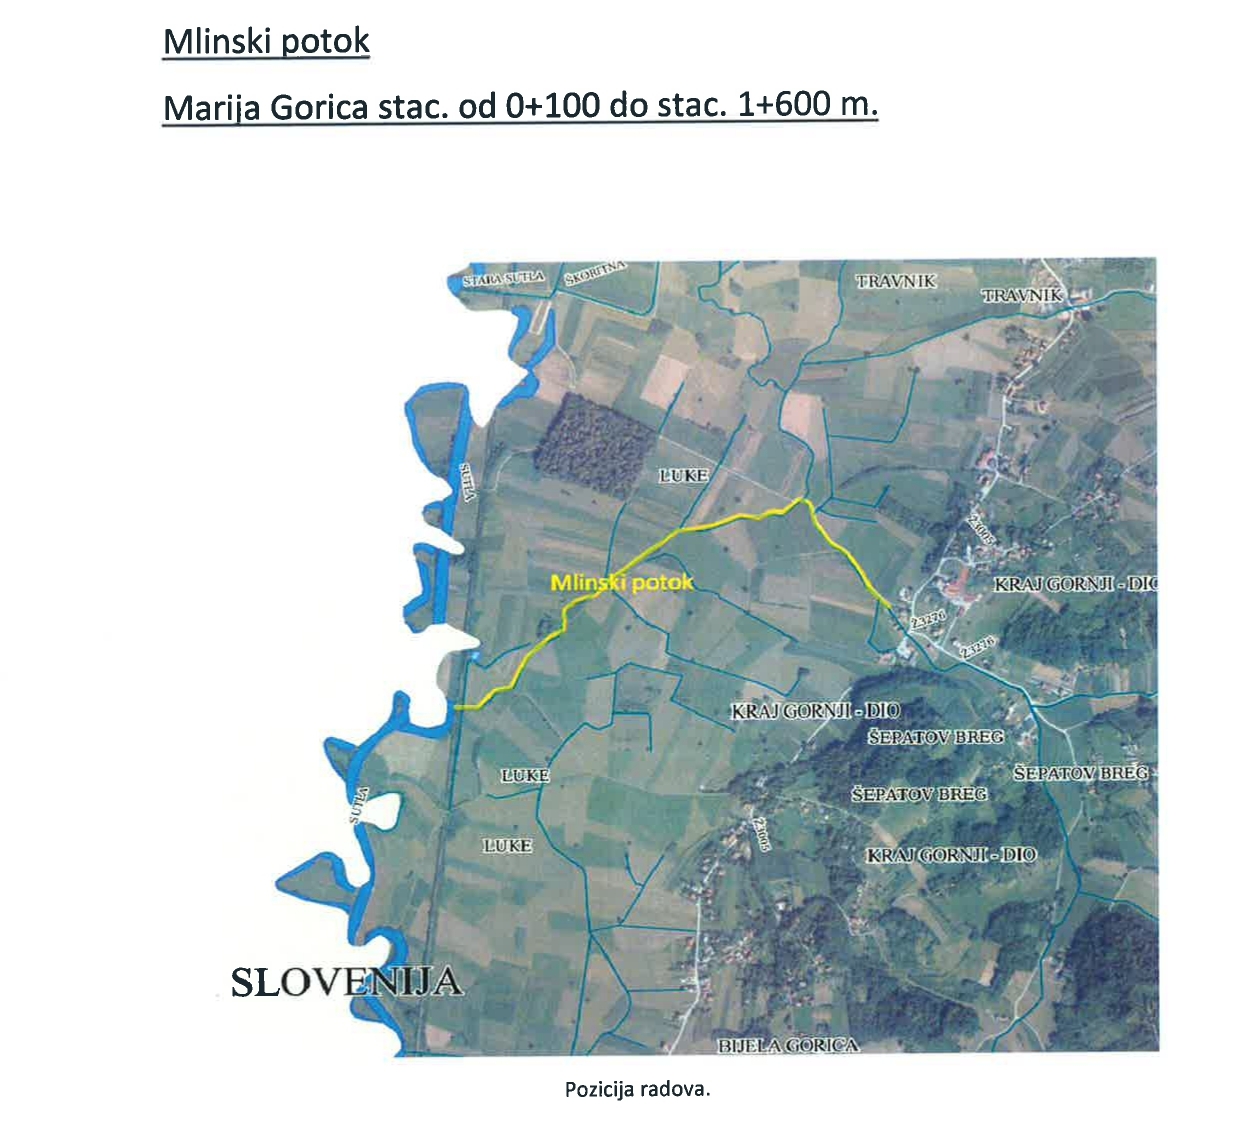 Mlinski potok Marija Gorica uklanjanje naplavina iz korita vodotoka page 0001